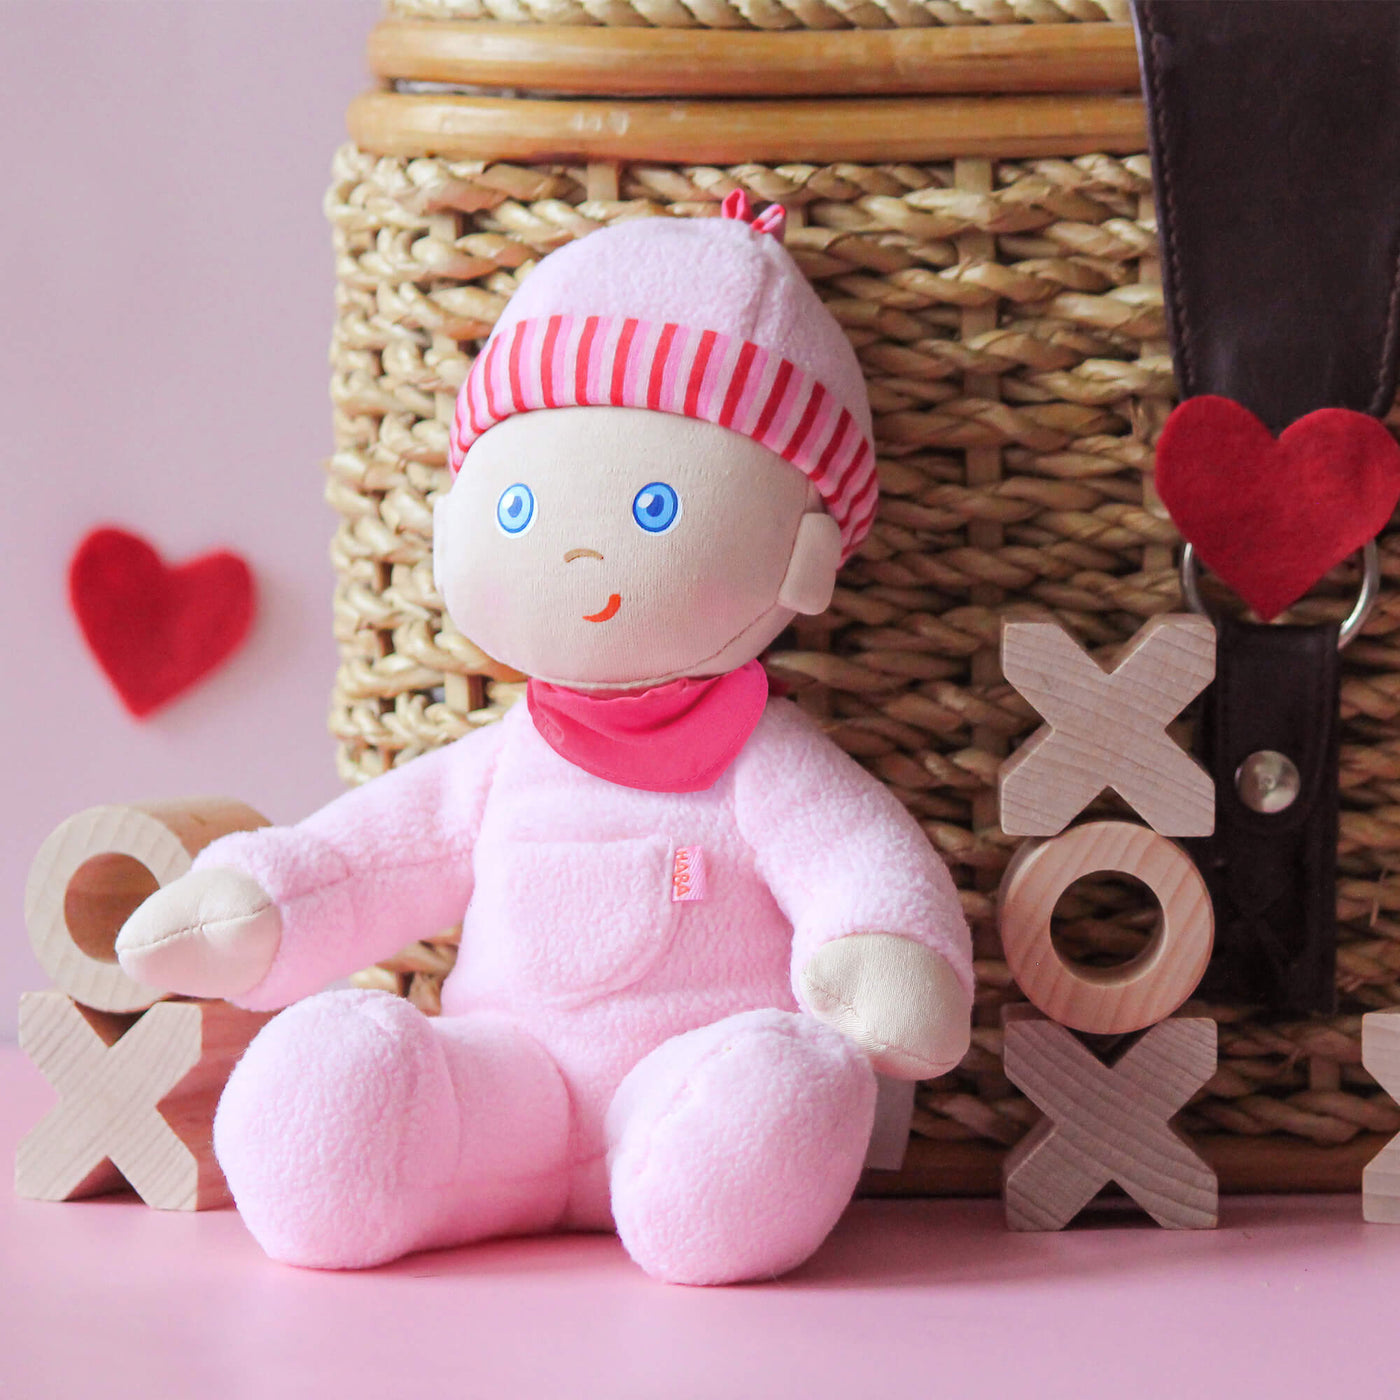 Snug Up 8” Pink Baby Doll | Plush Toys for Babies | HABA USA